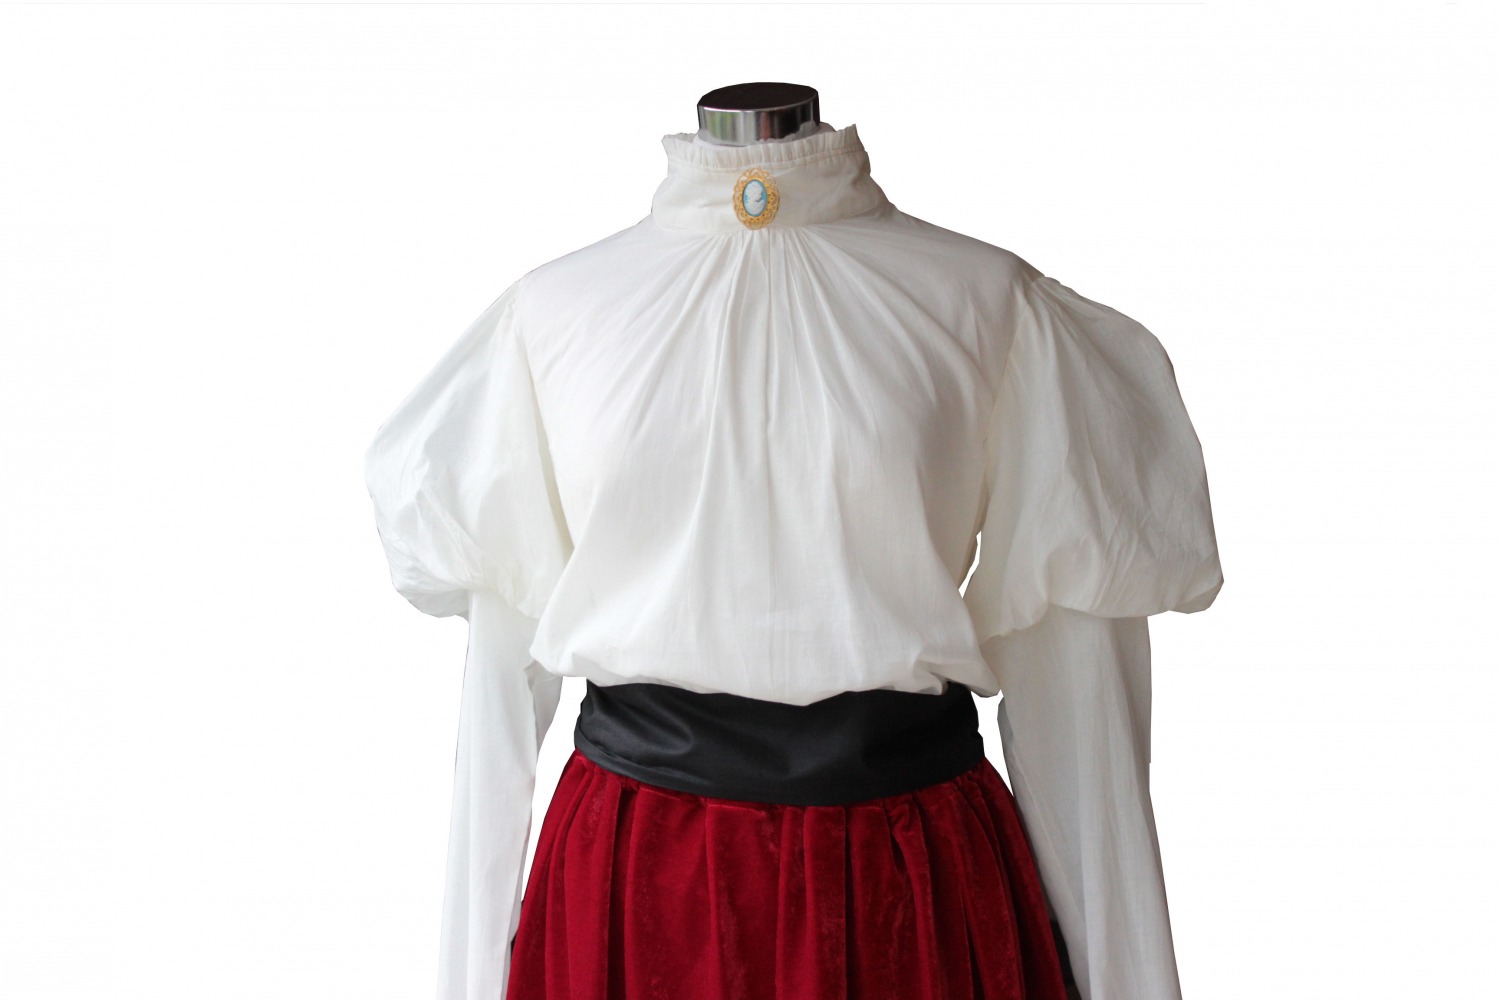 Ladies Victorian Carol Singer School Mistress Costume and Bonnet Size 12 - 14 Image